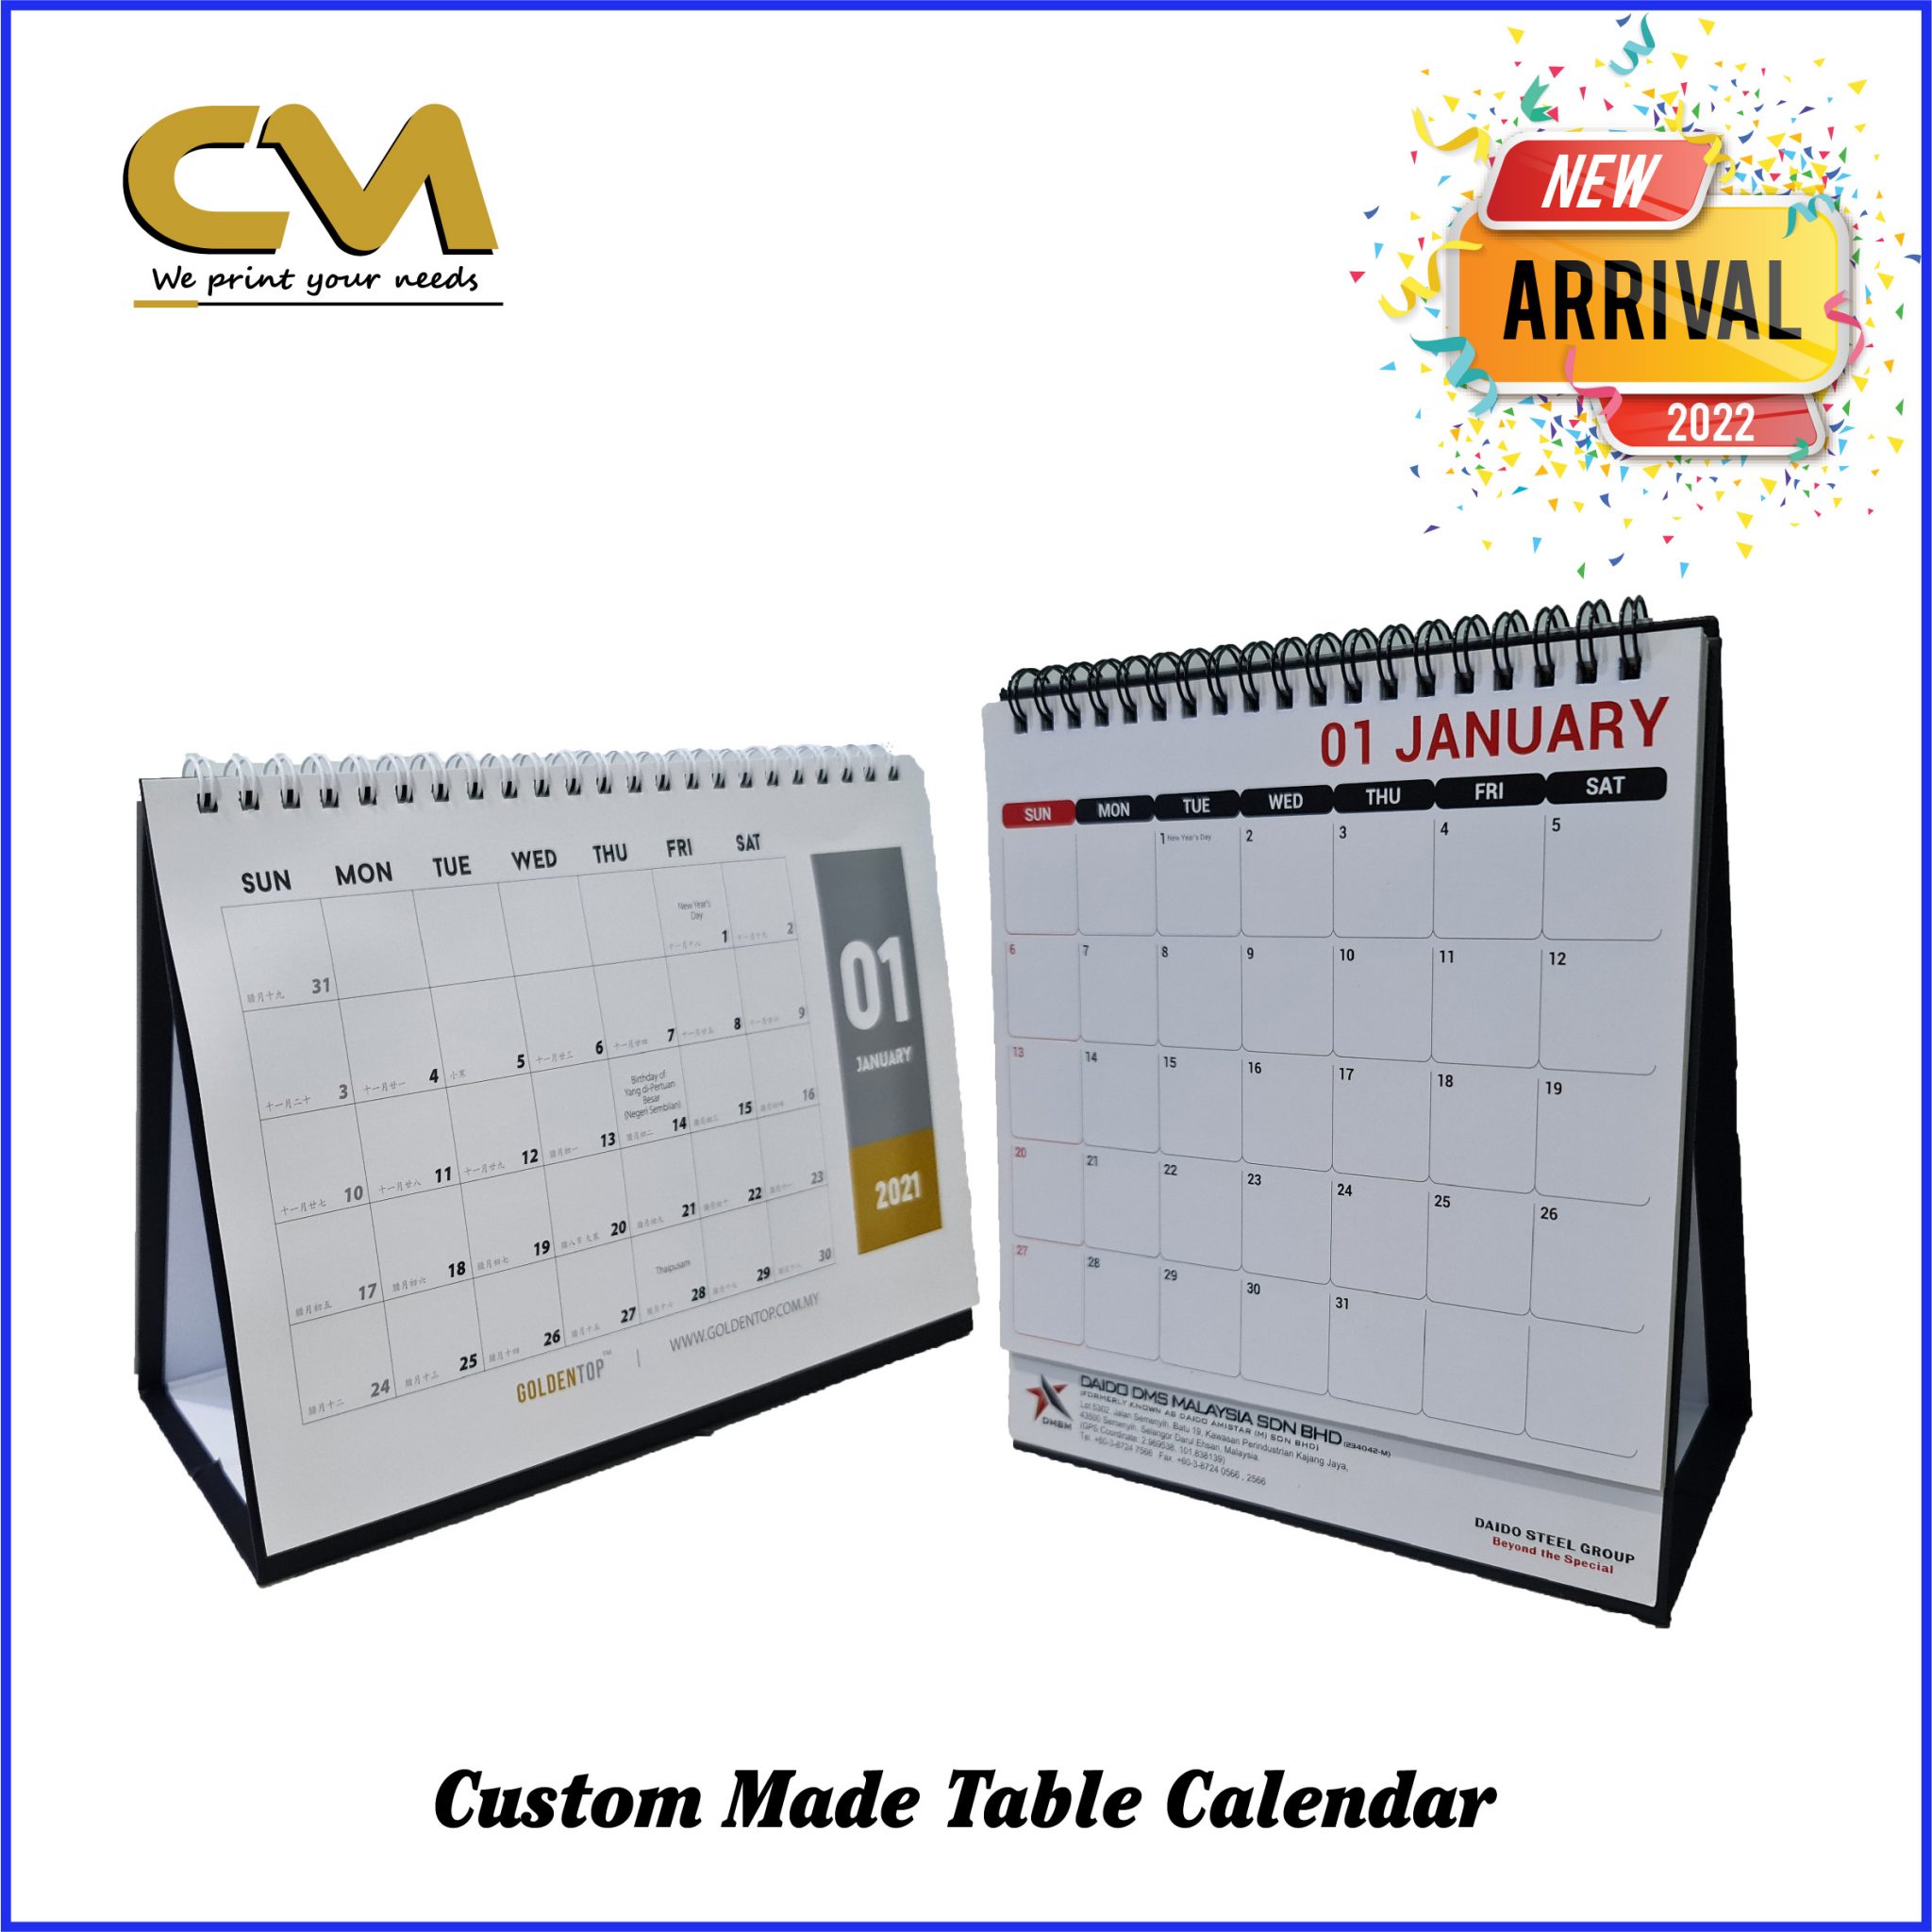 Custom Made Wire O’ Table Calendar 2022 CM Office Printing